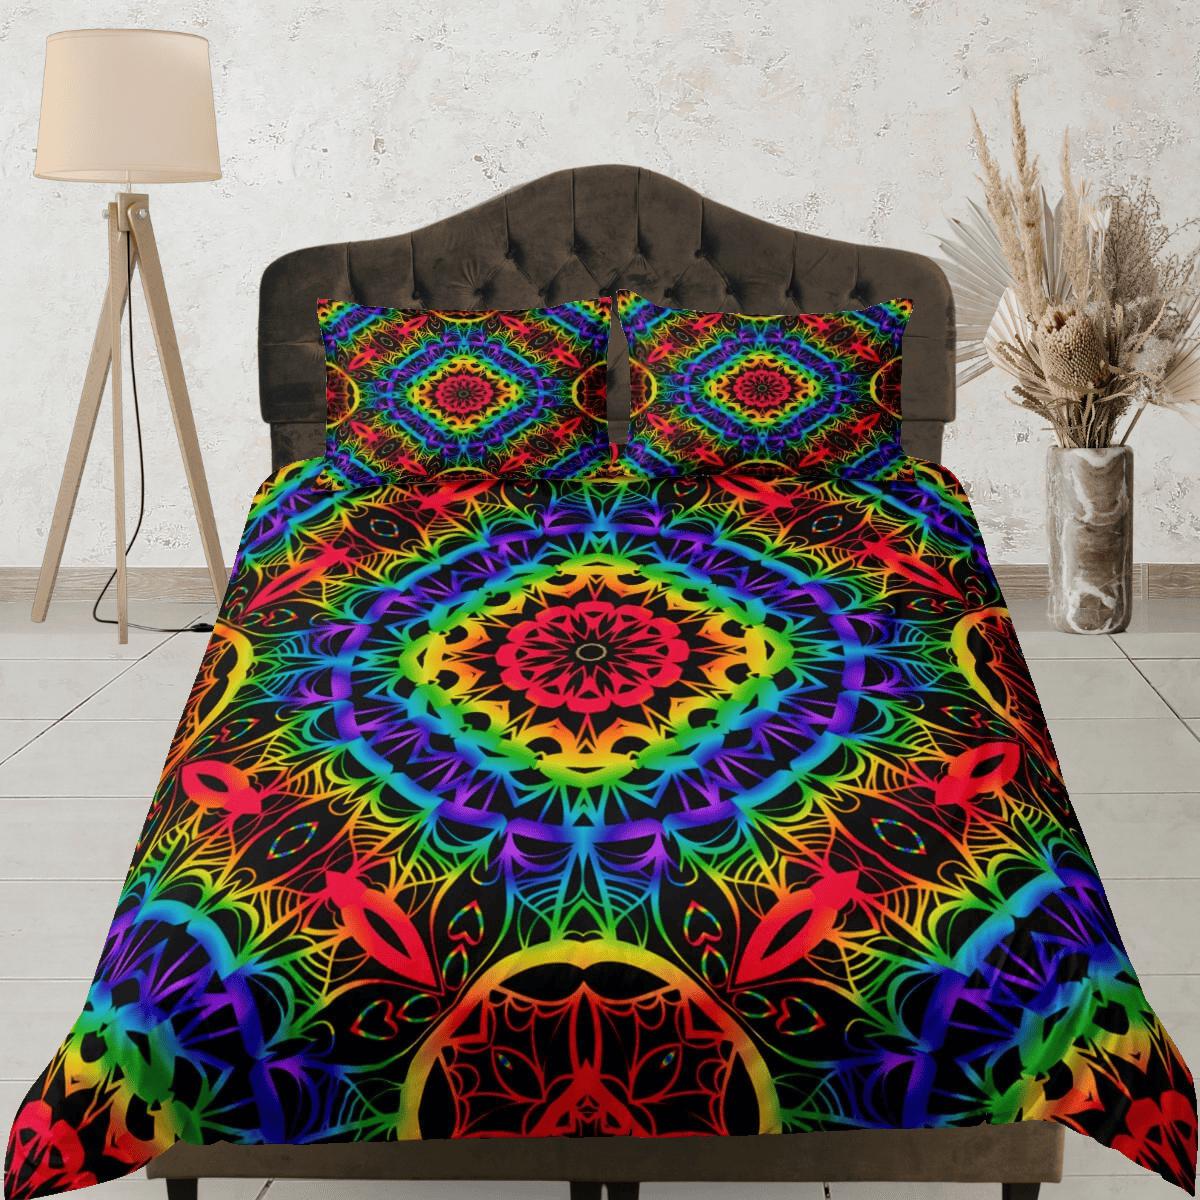 daintyduvet Rainbow psychedelic duvet cover hippie bedding set full, queen, king, preppy dorm bedding, indie room decor, aesthetic bedspread y2k